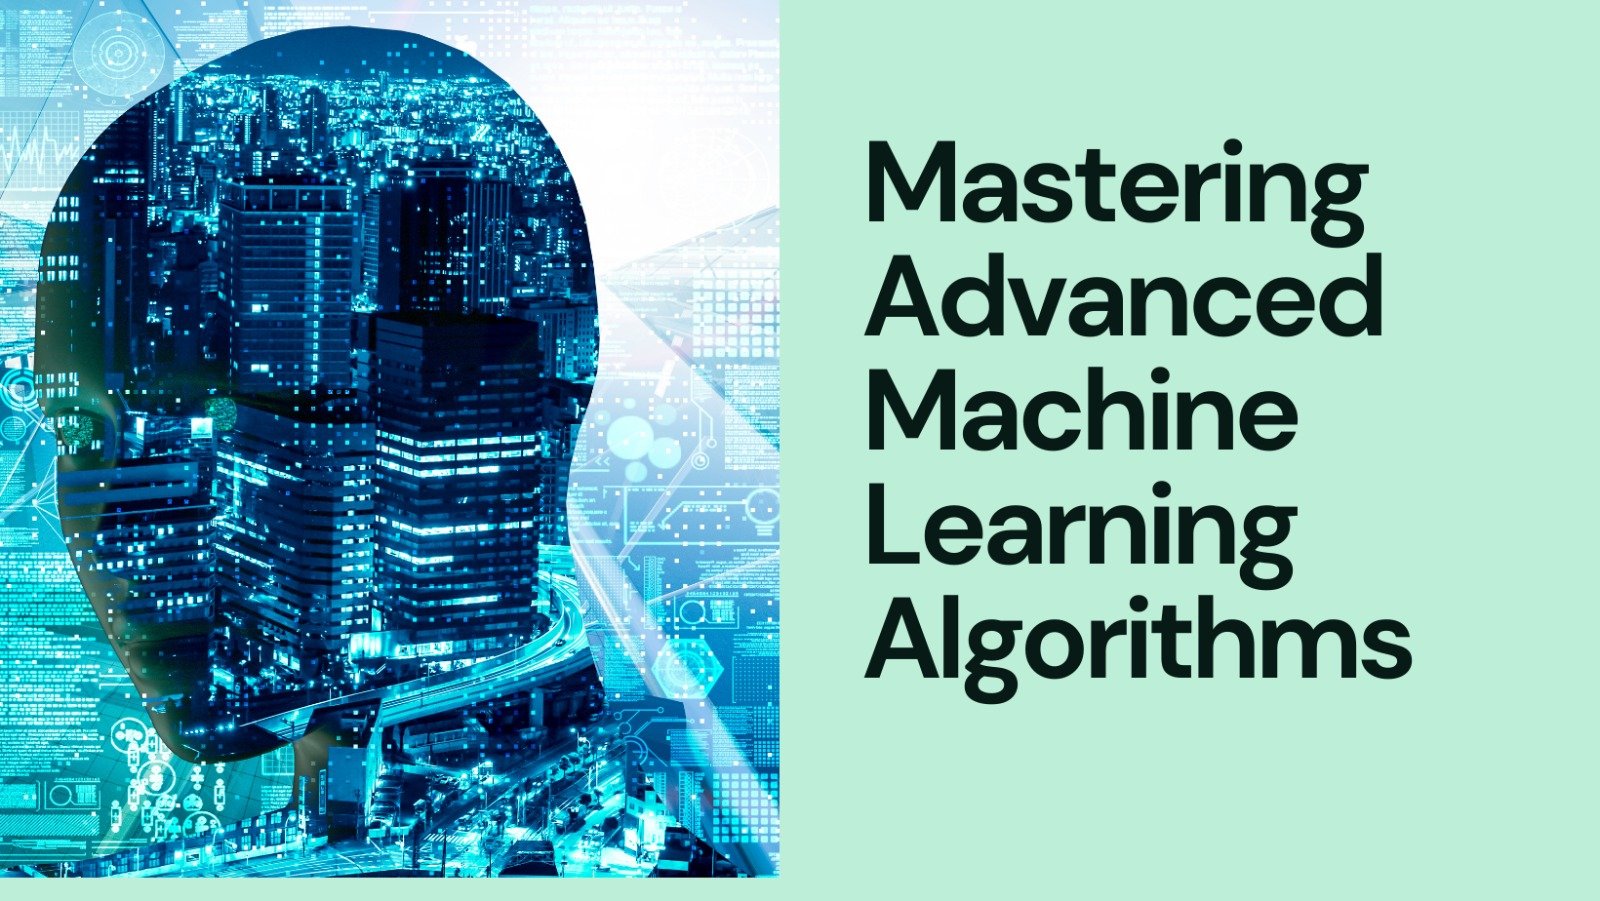 Advanced Machine Learning Algorithms